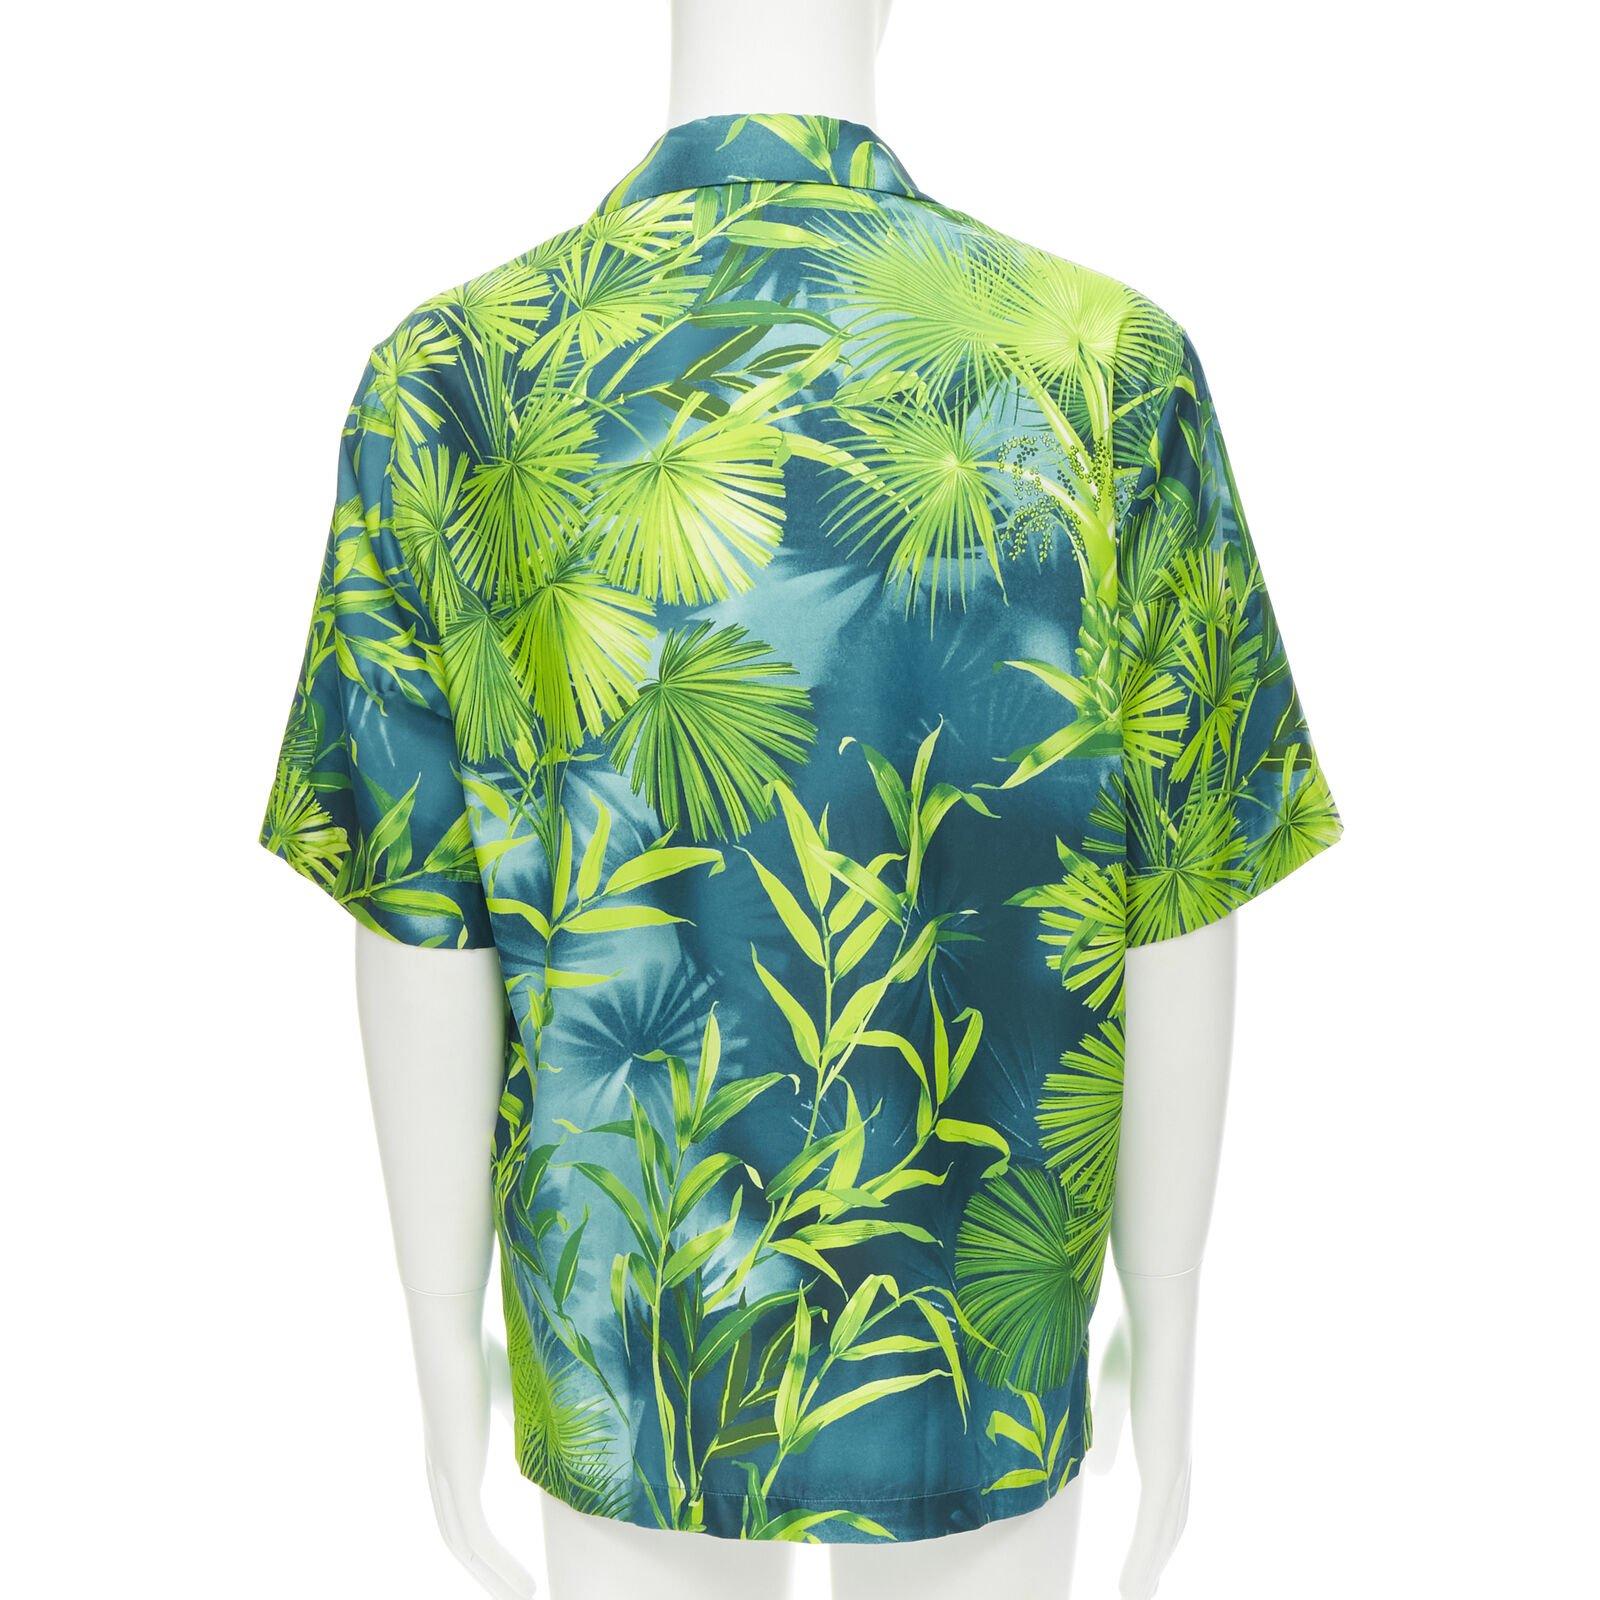 VERSACE 2020 Iconic JLo Jungle print green tropical print shirt EU38 S For Sale 1